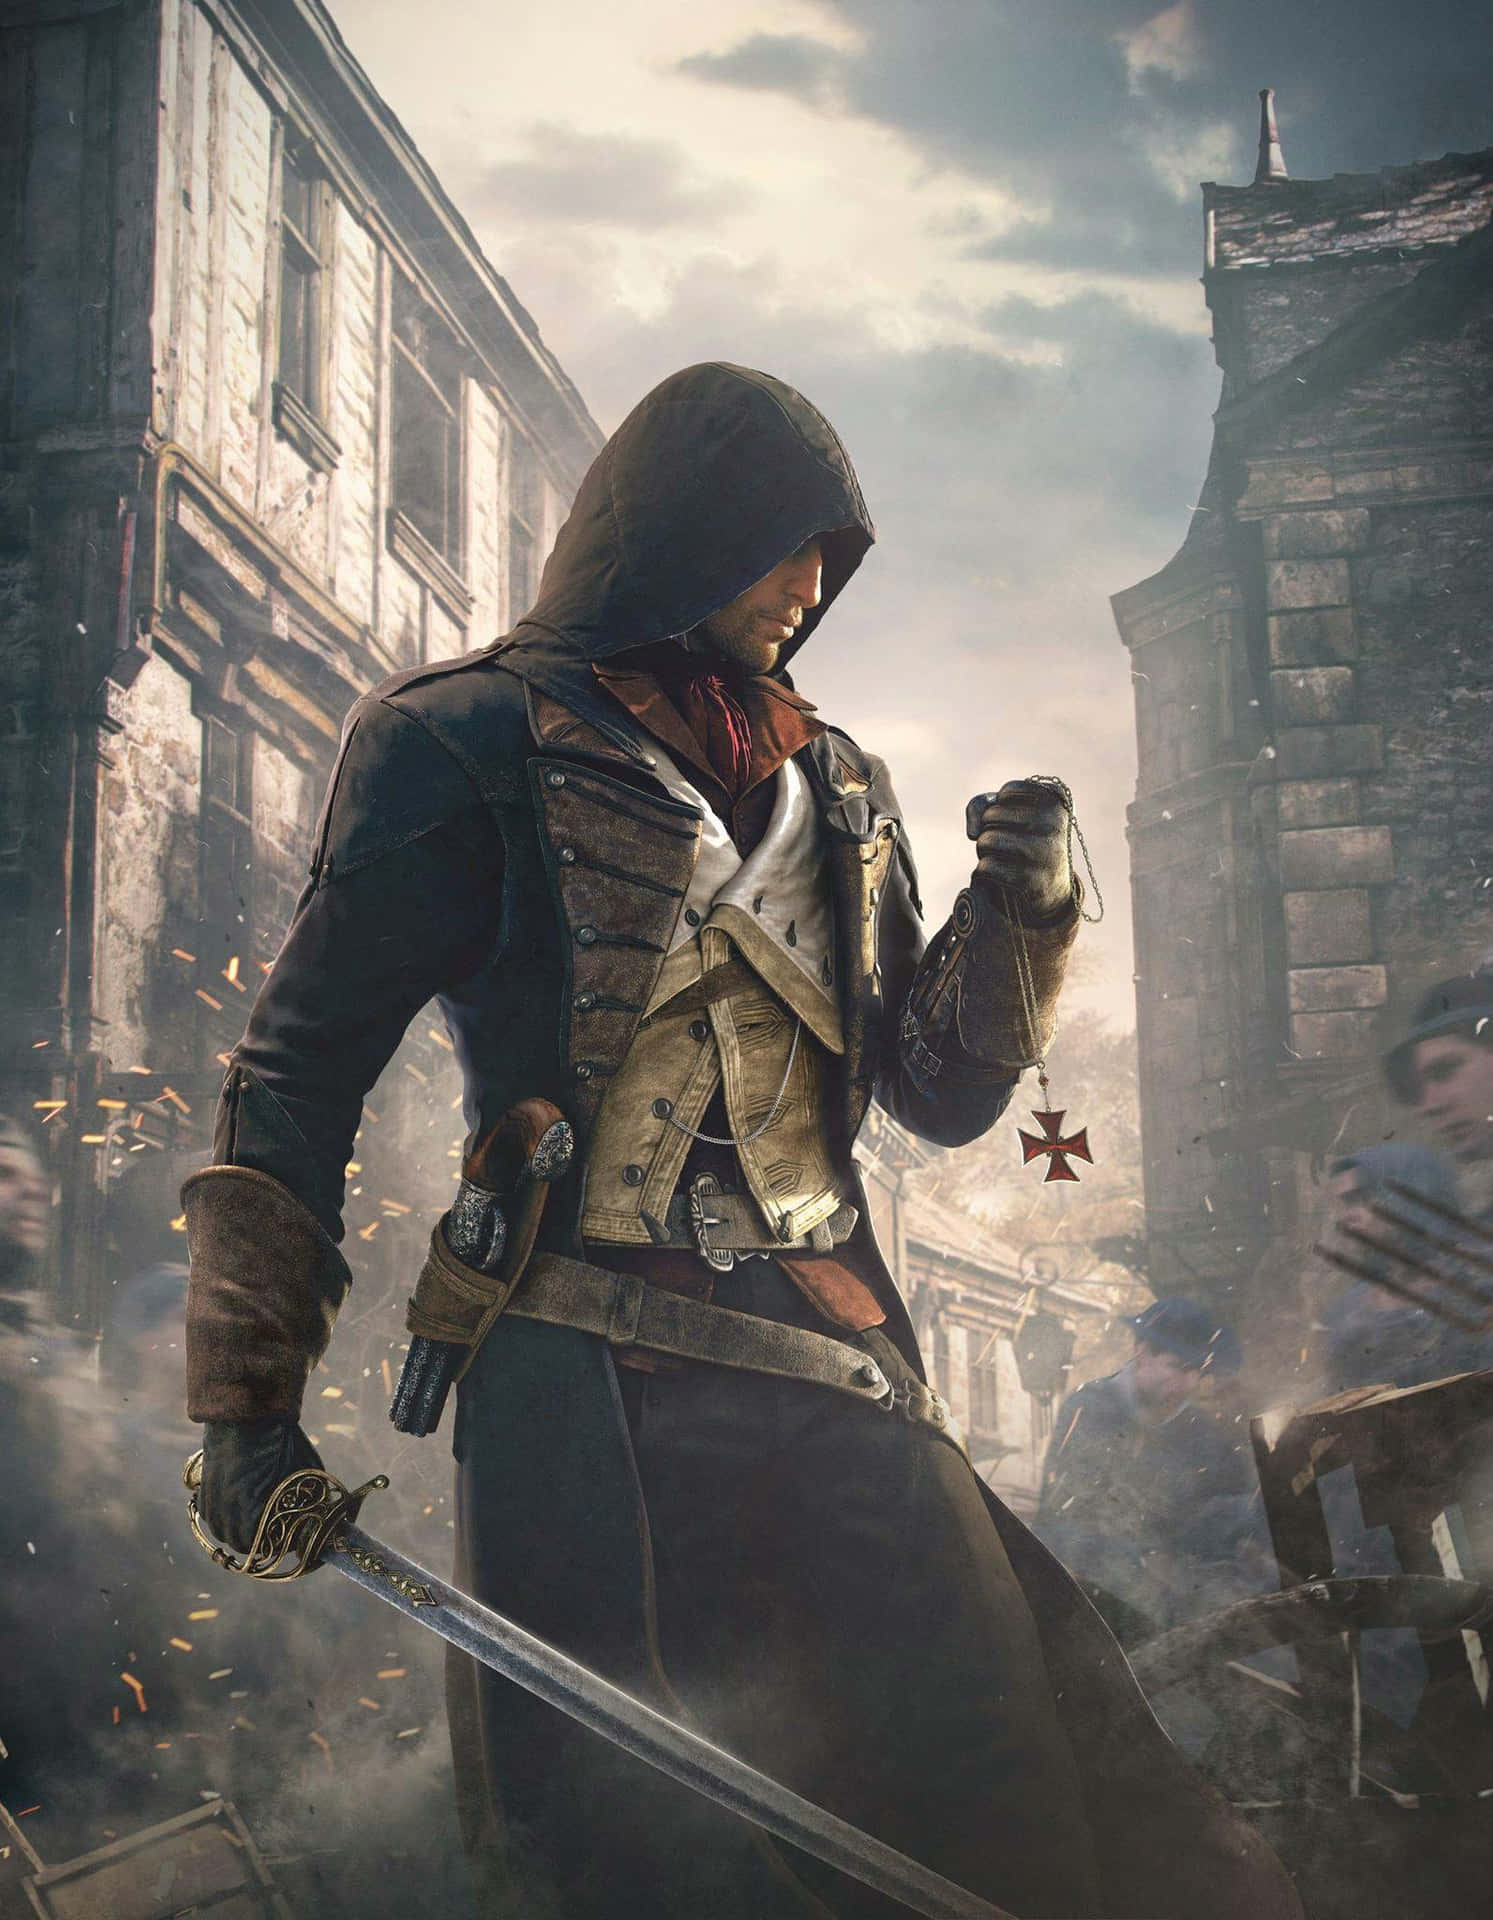 Assassins Creed UNITY Wallpaper 1440p by mastersebiX on DeviantArt